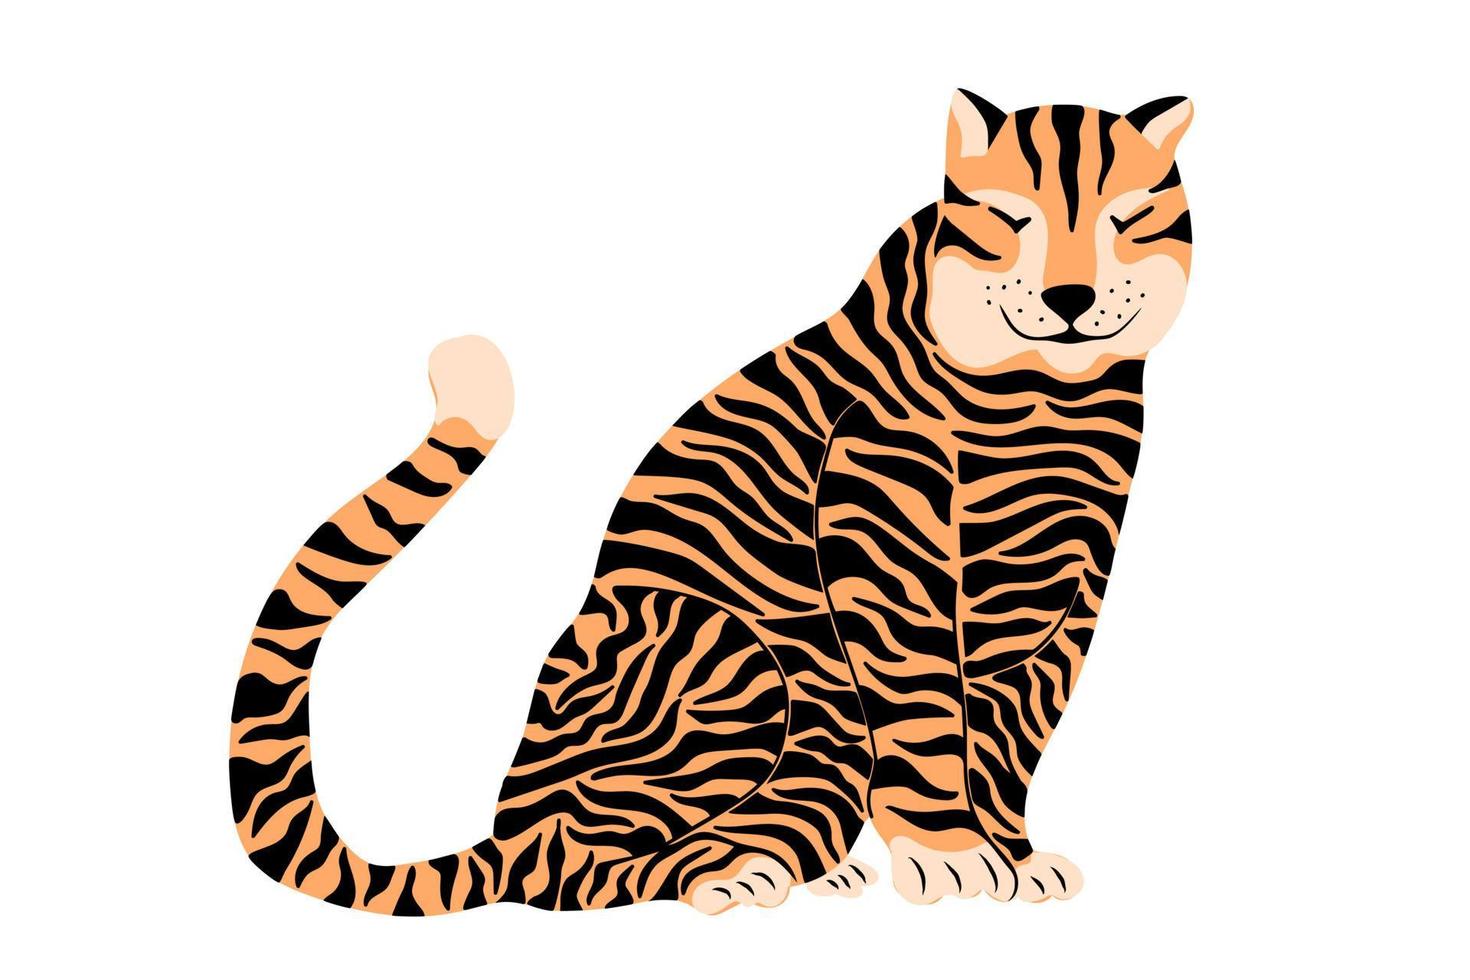 lindo tigre dibujado a mano aislado sobre fondo blanco vector